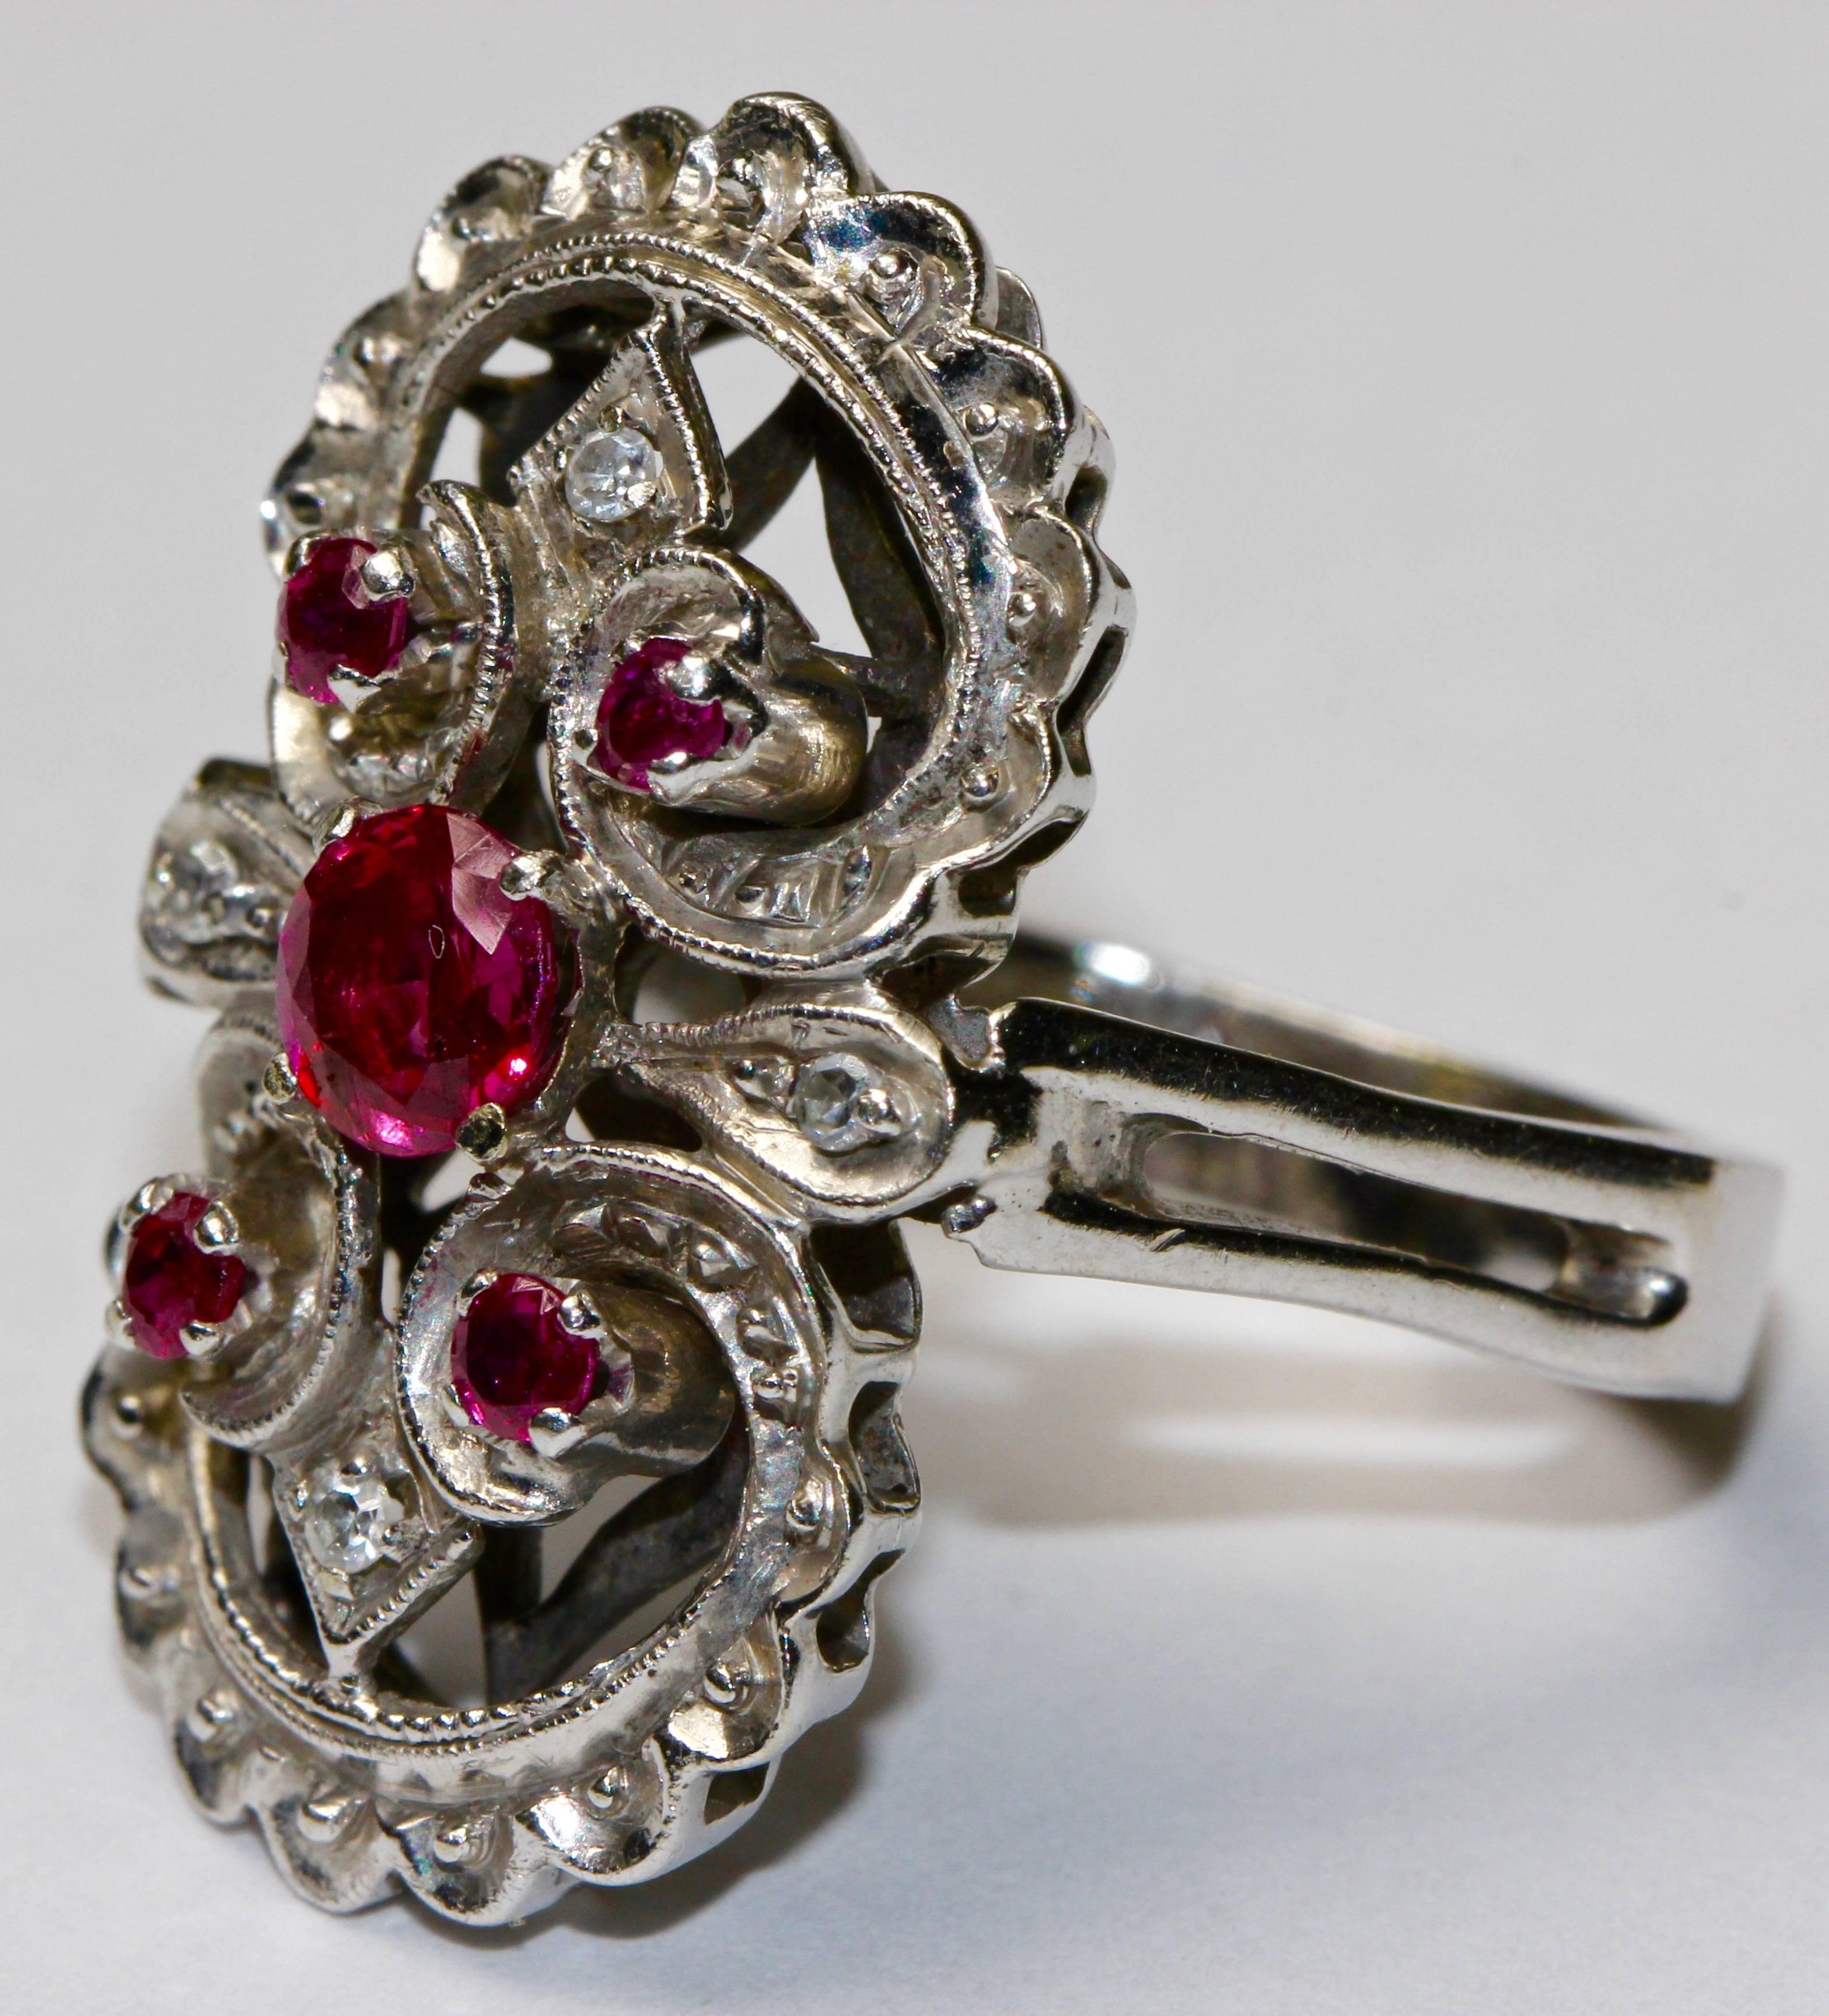 Elegant ladies white gold ring, set with five rubies and four tiny diamonds.
Hallmarked.